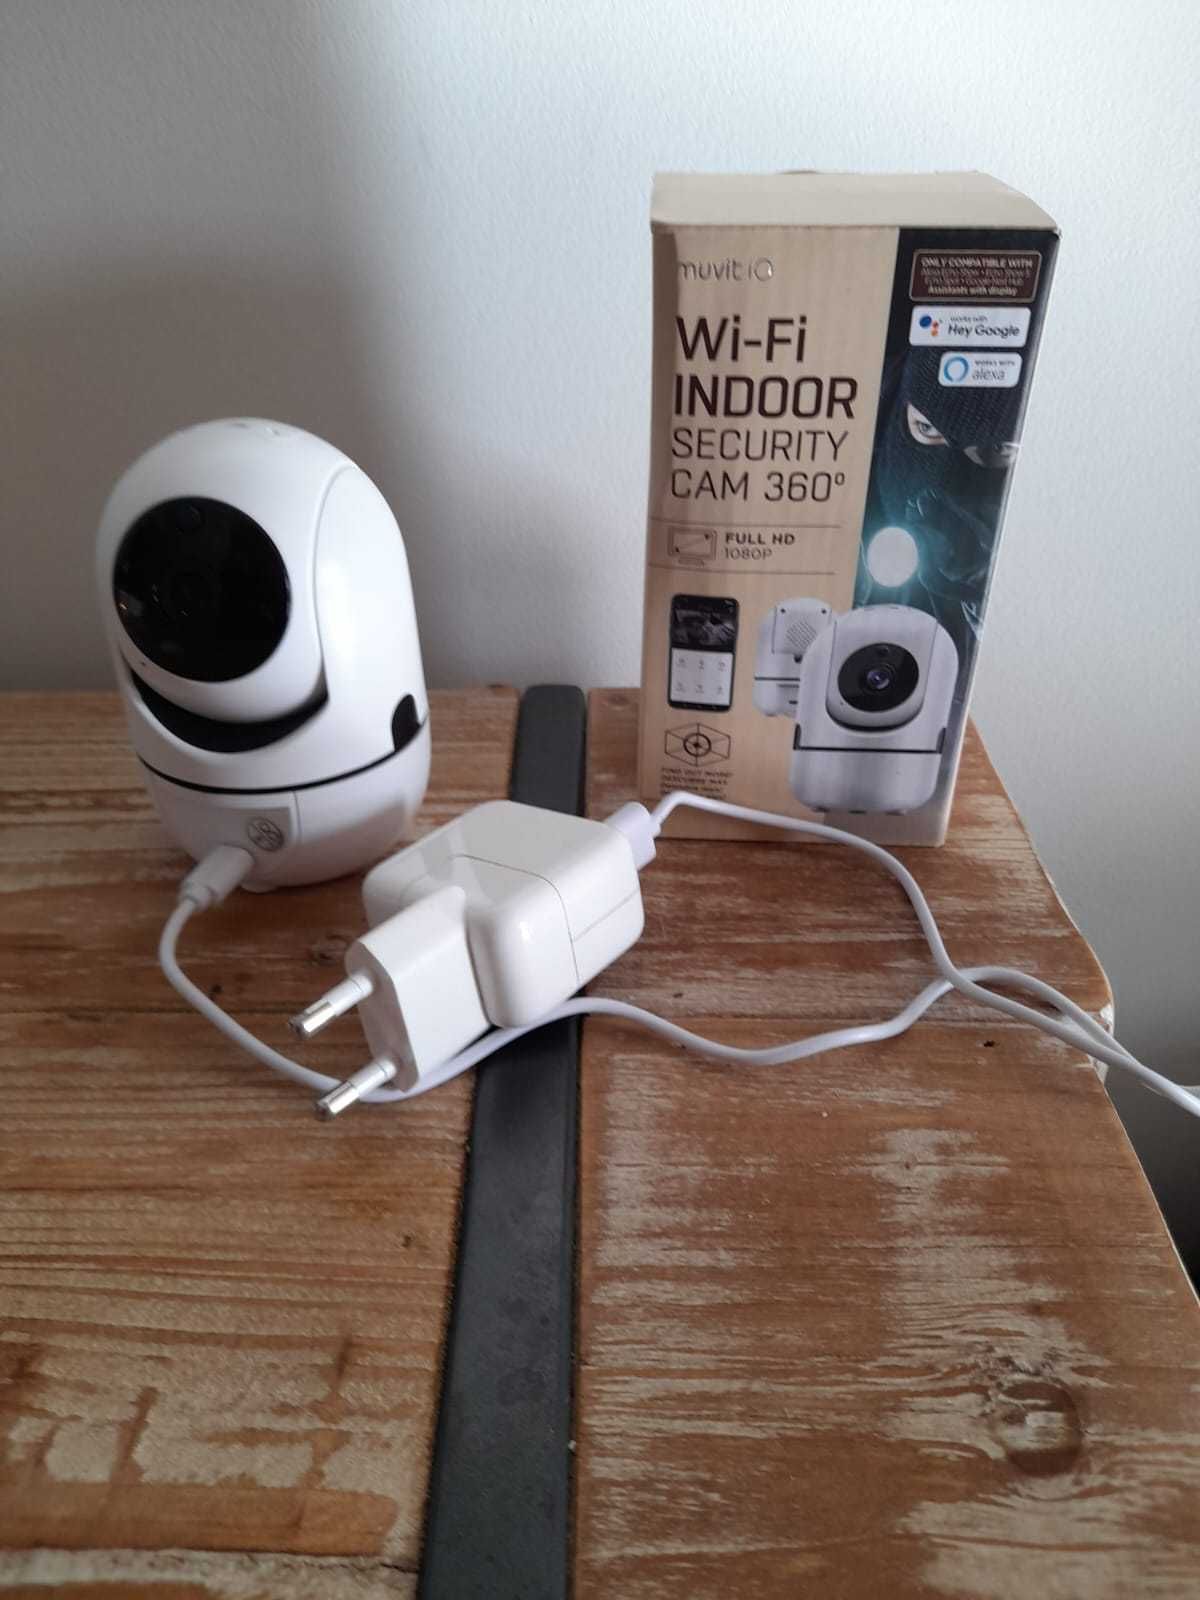 Wi-Fi Indoor Security Cam 360°